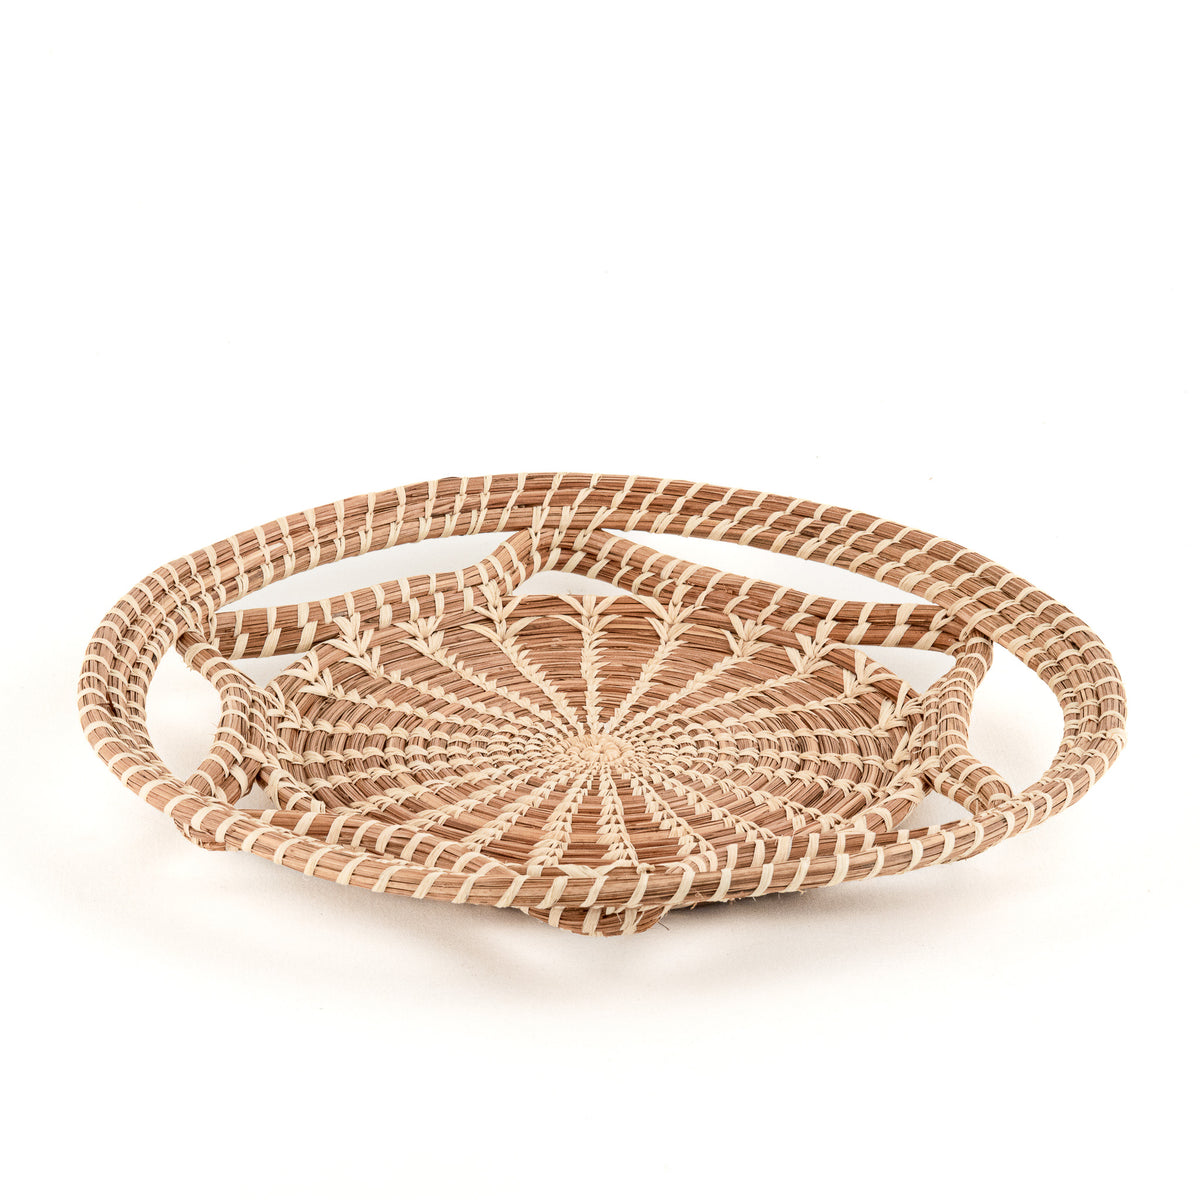 Pine Needle Basket with wavy design